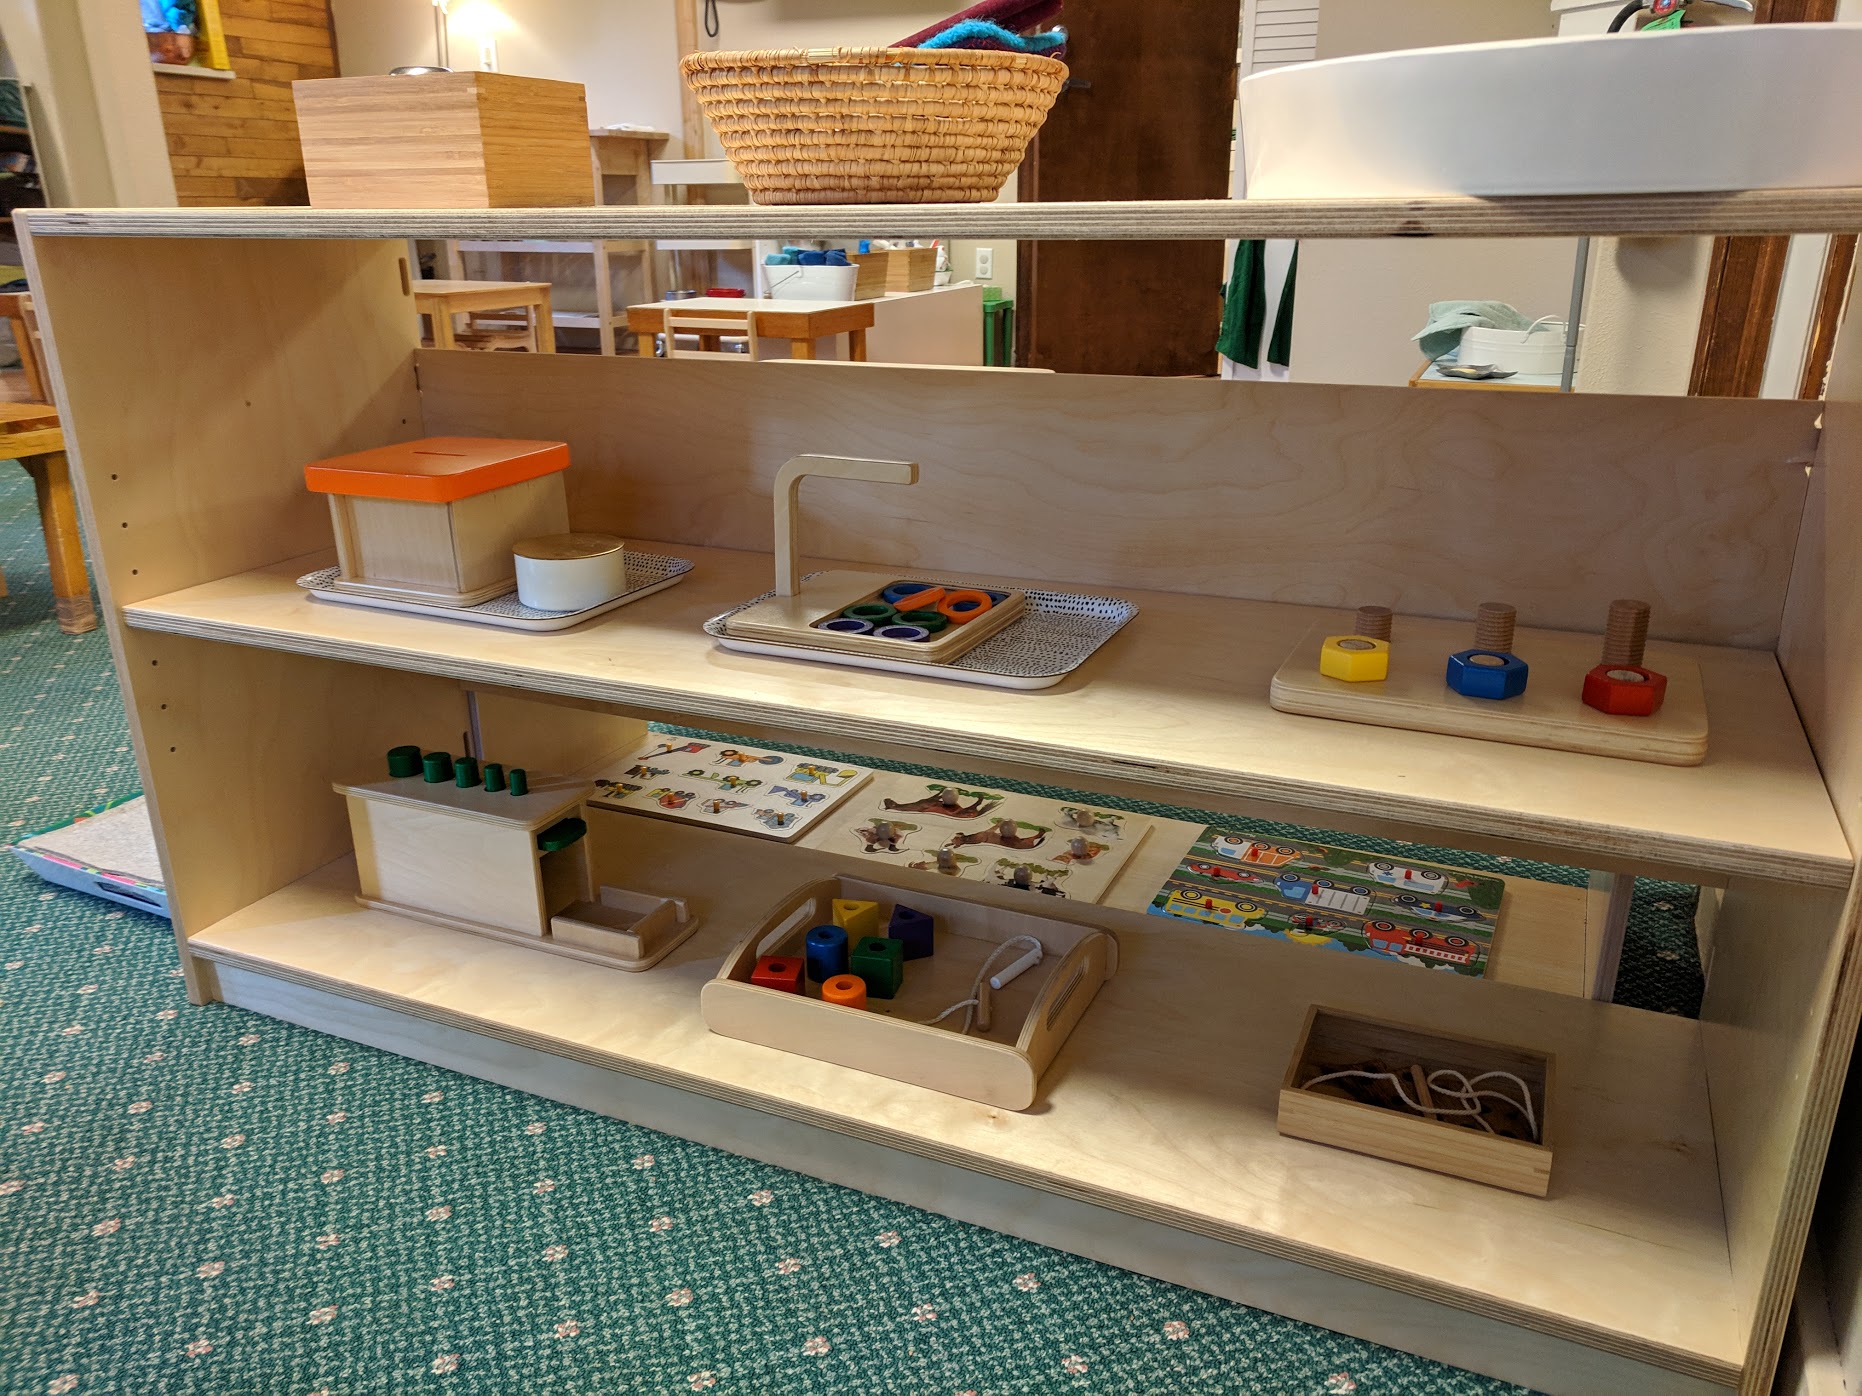  Manipulatives Shelf The Montessori School of Evergreen 2019 